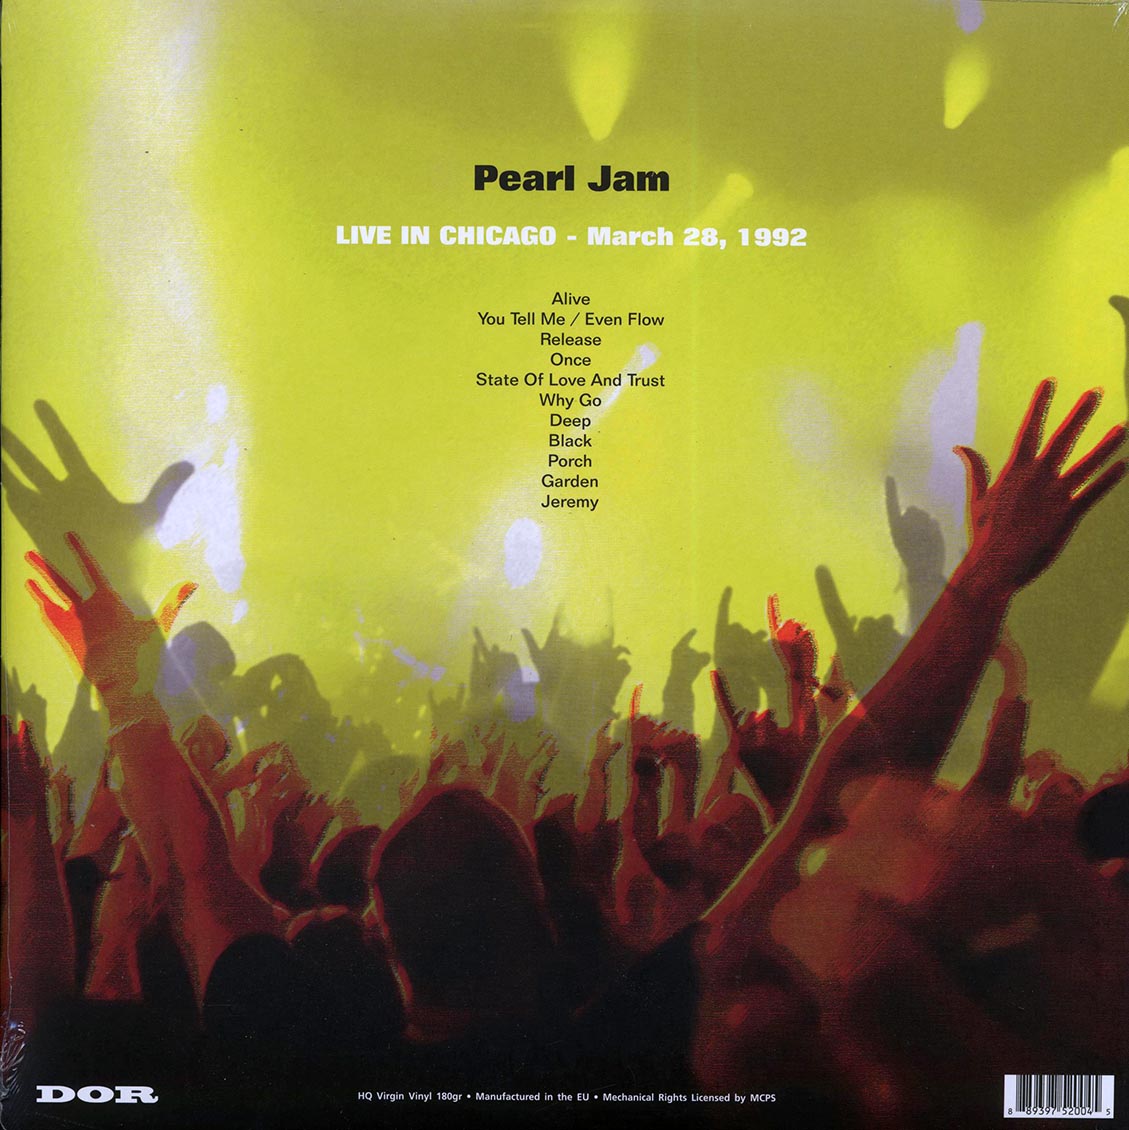 Pearl Jam - Live In Chicago March 28, 1992 (180g) (red vinyl) - Vinyl LP, LP